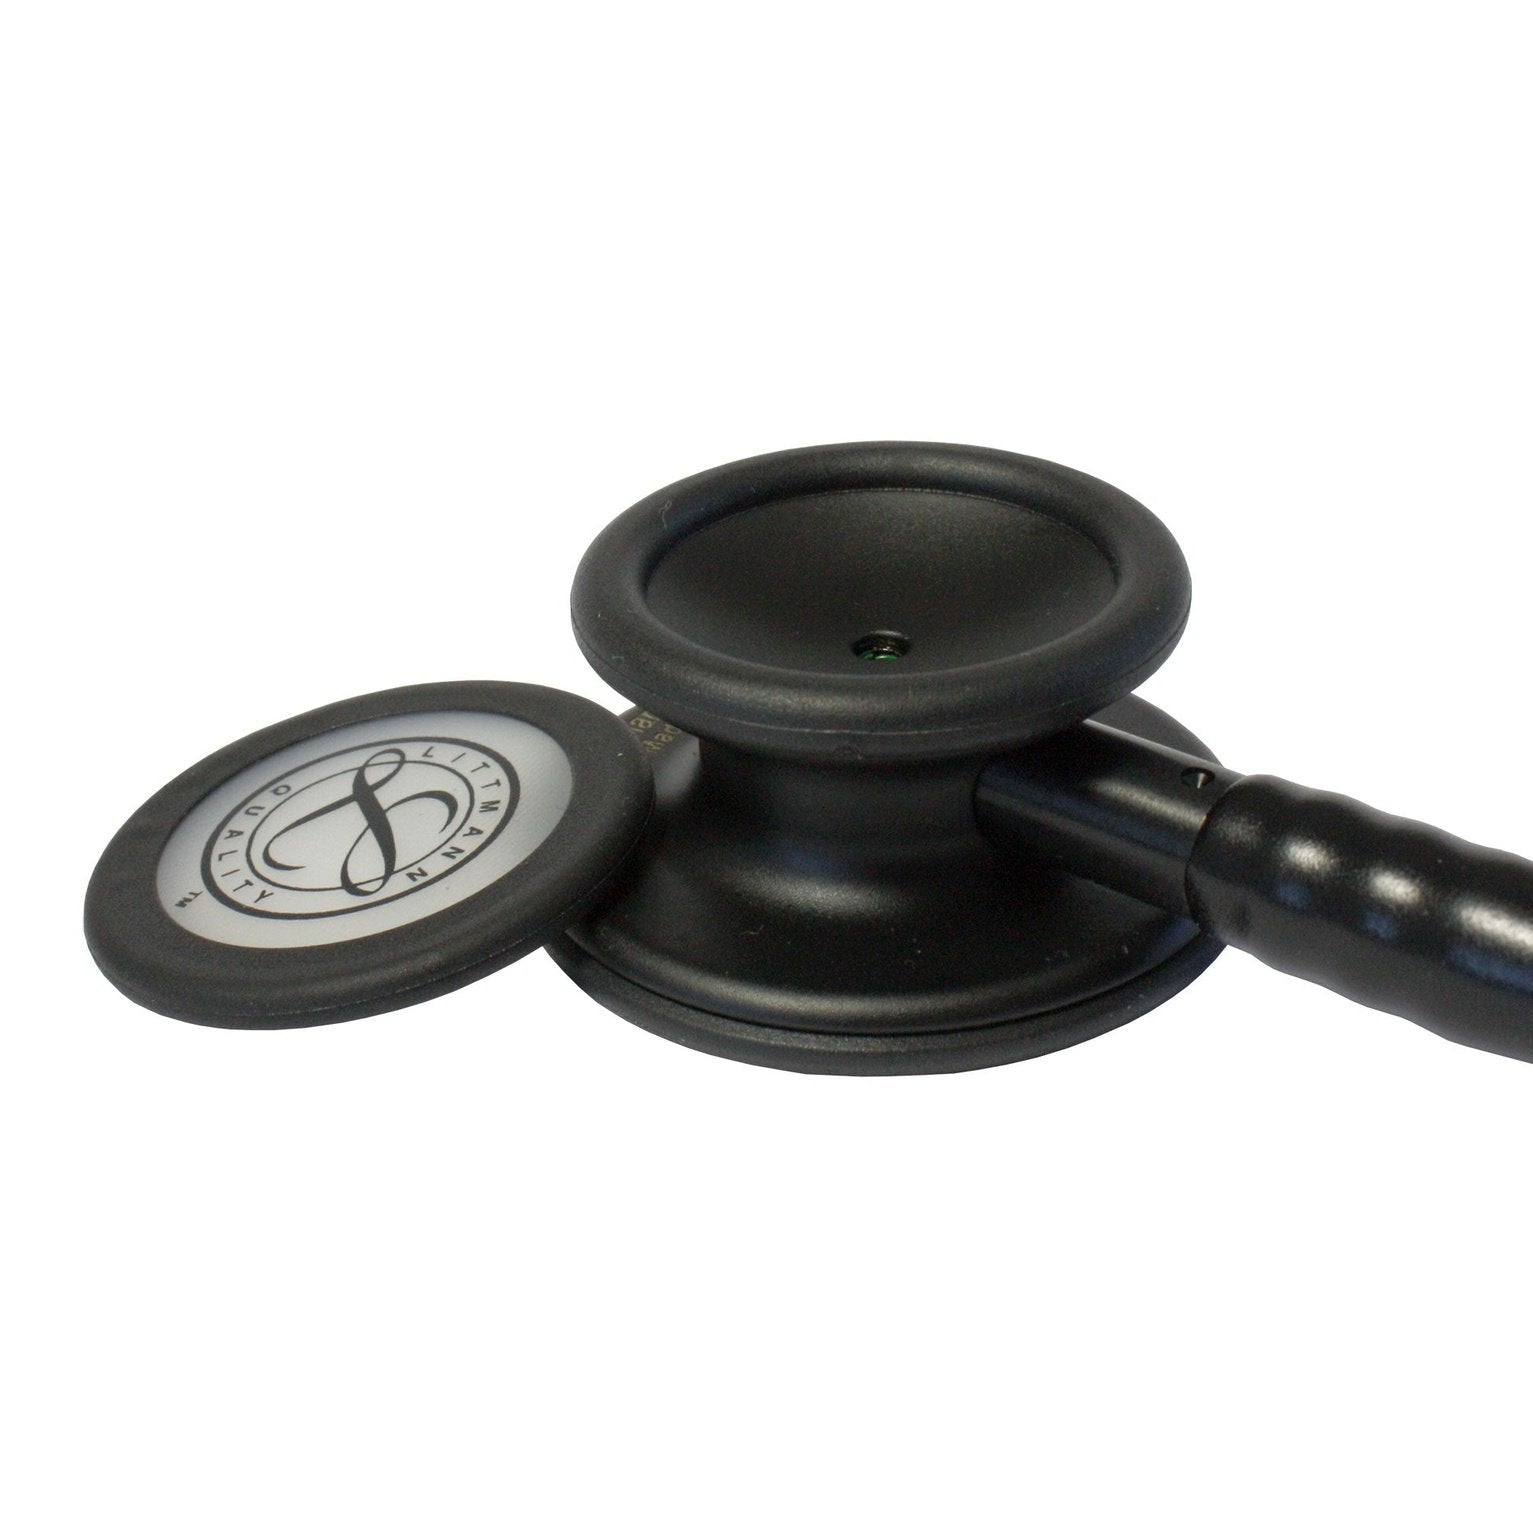 Littmann Classic III Monitoring Stethoscope - Black